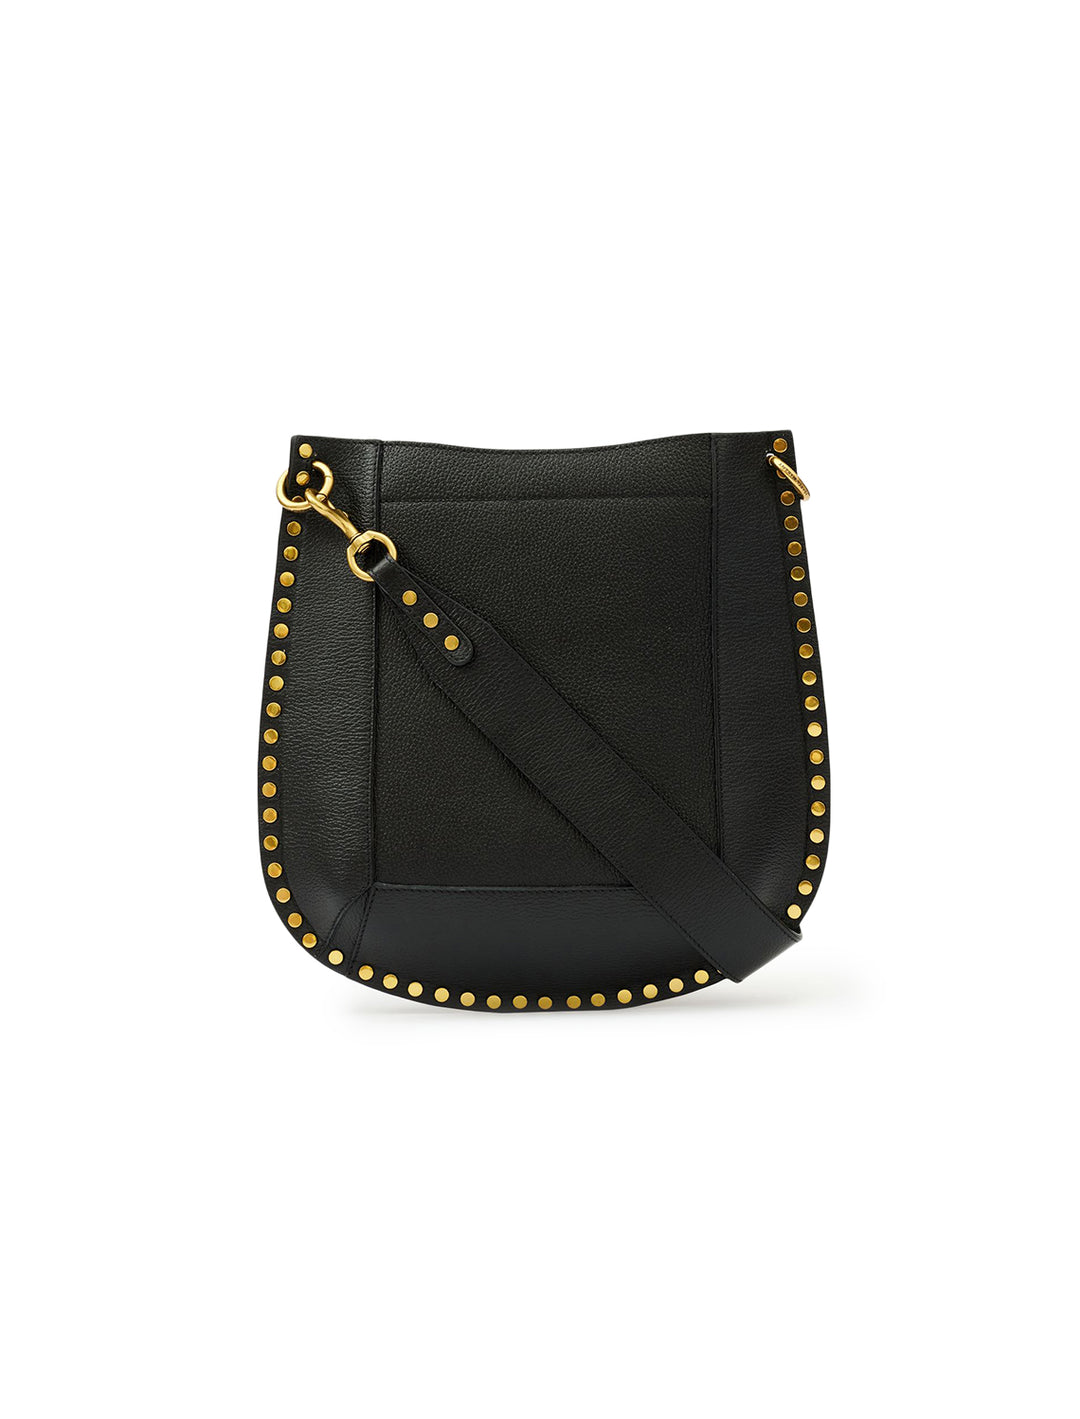 Back view of Isabel Marant Etoile's oksan grained leather shoulder bag in black.